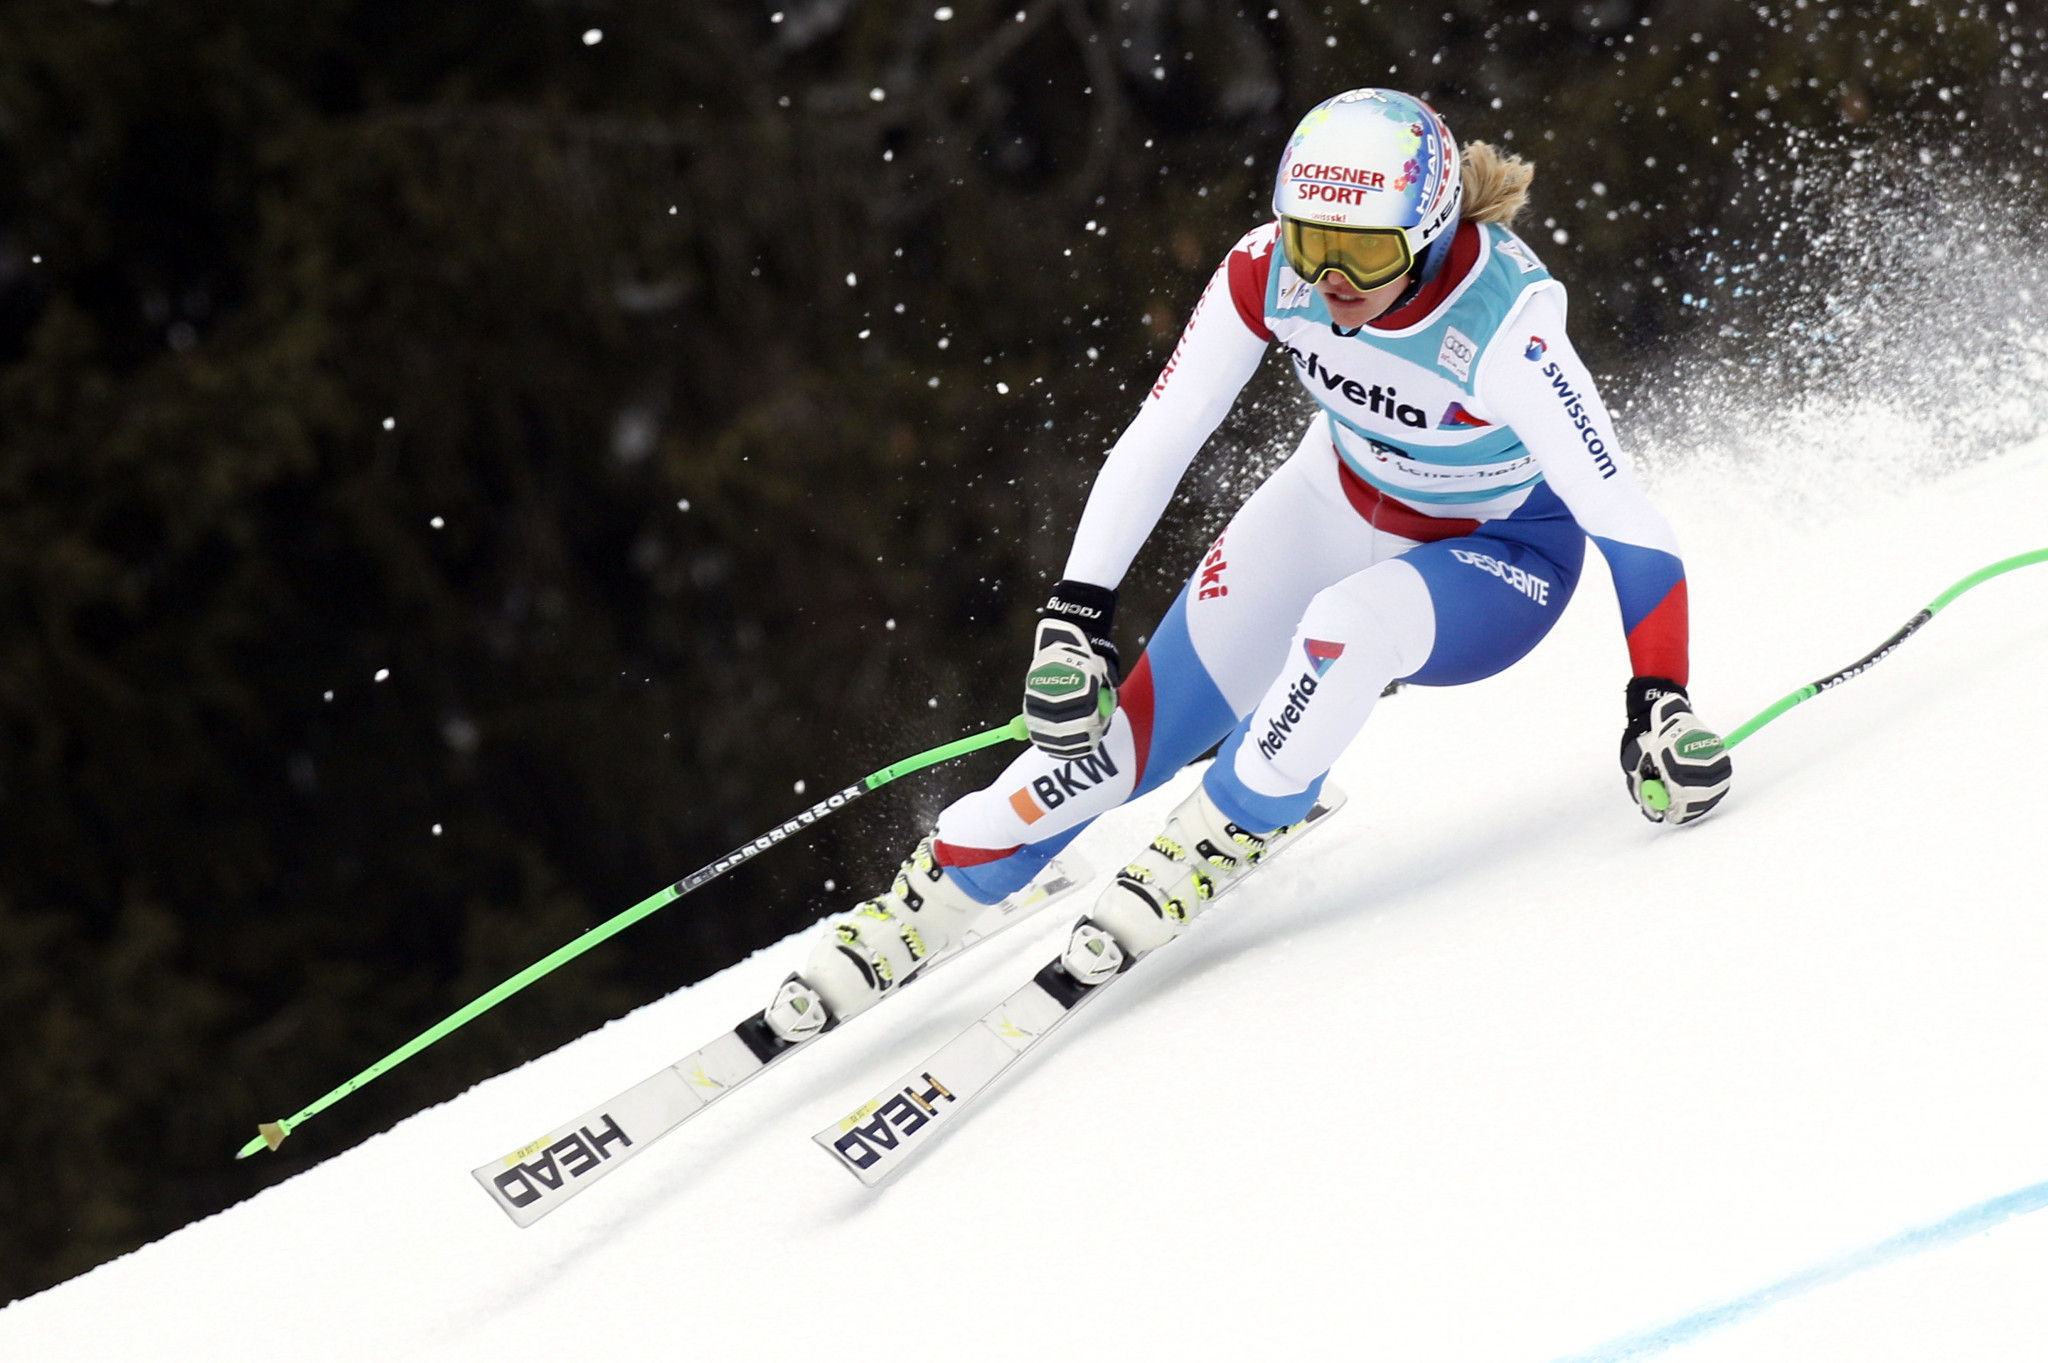 Lenzerheide will host the Alpine Ski World Cup finals in 2021 ©Getty Images